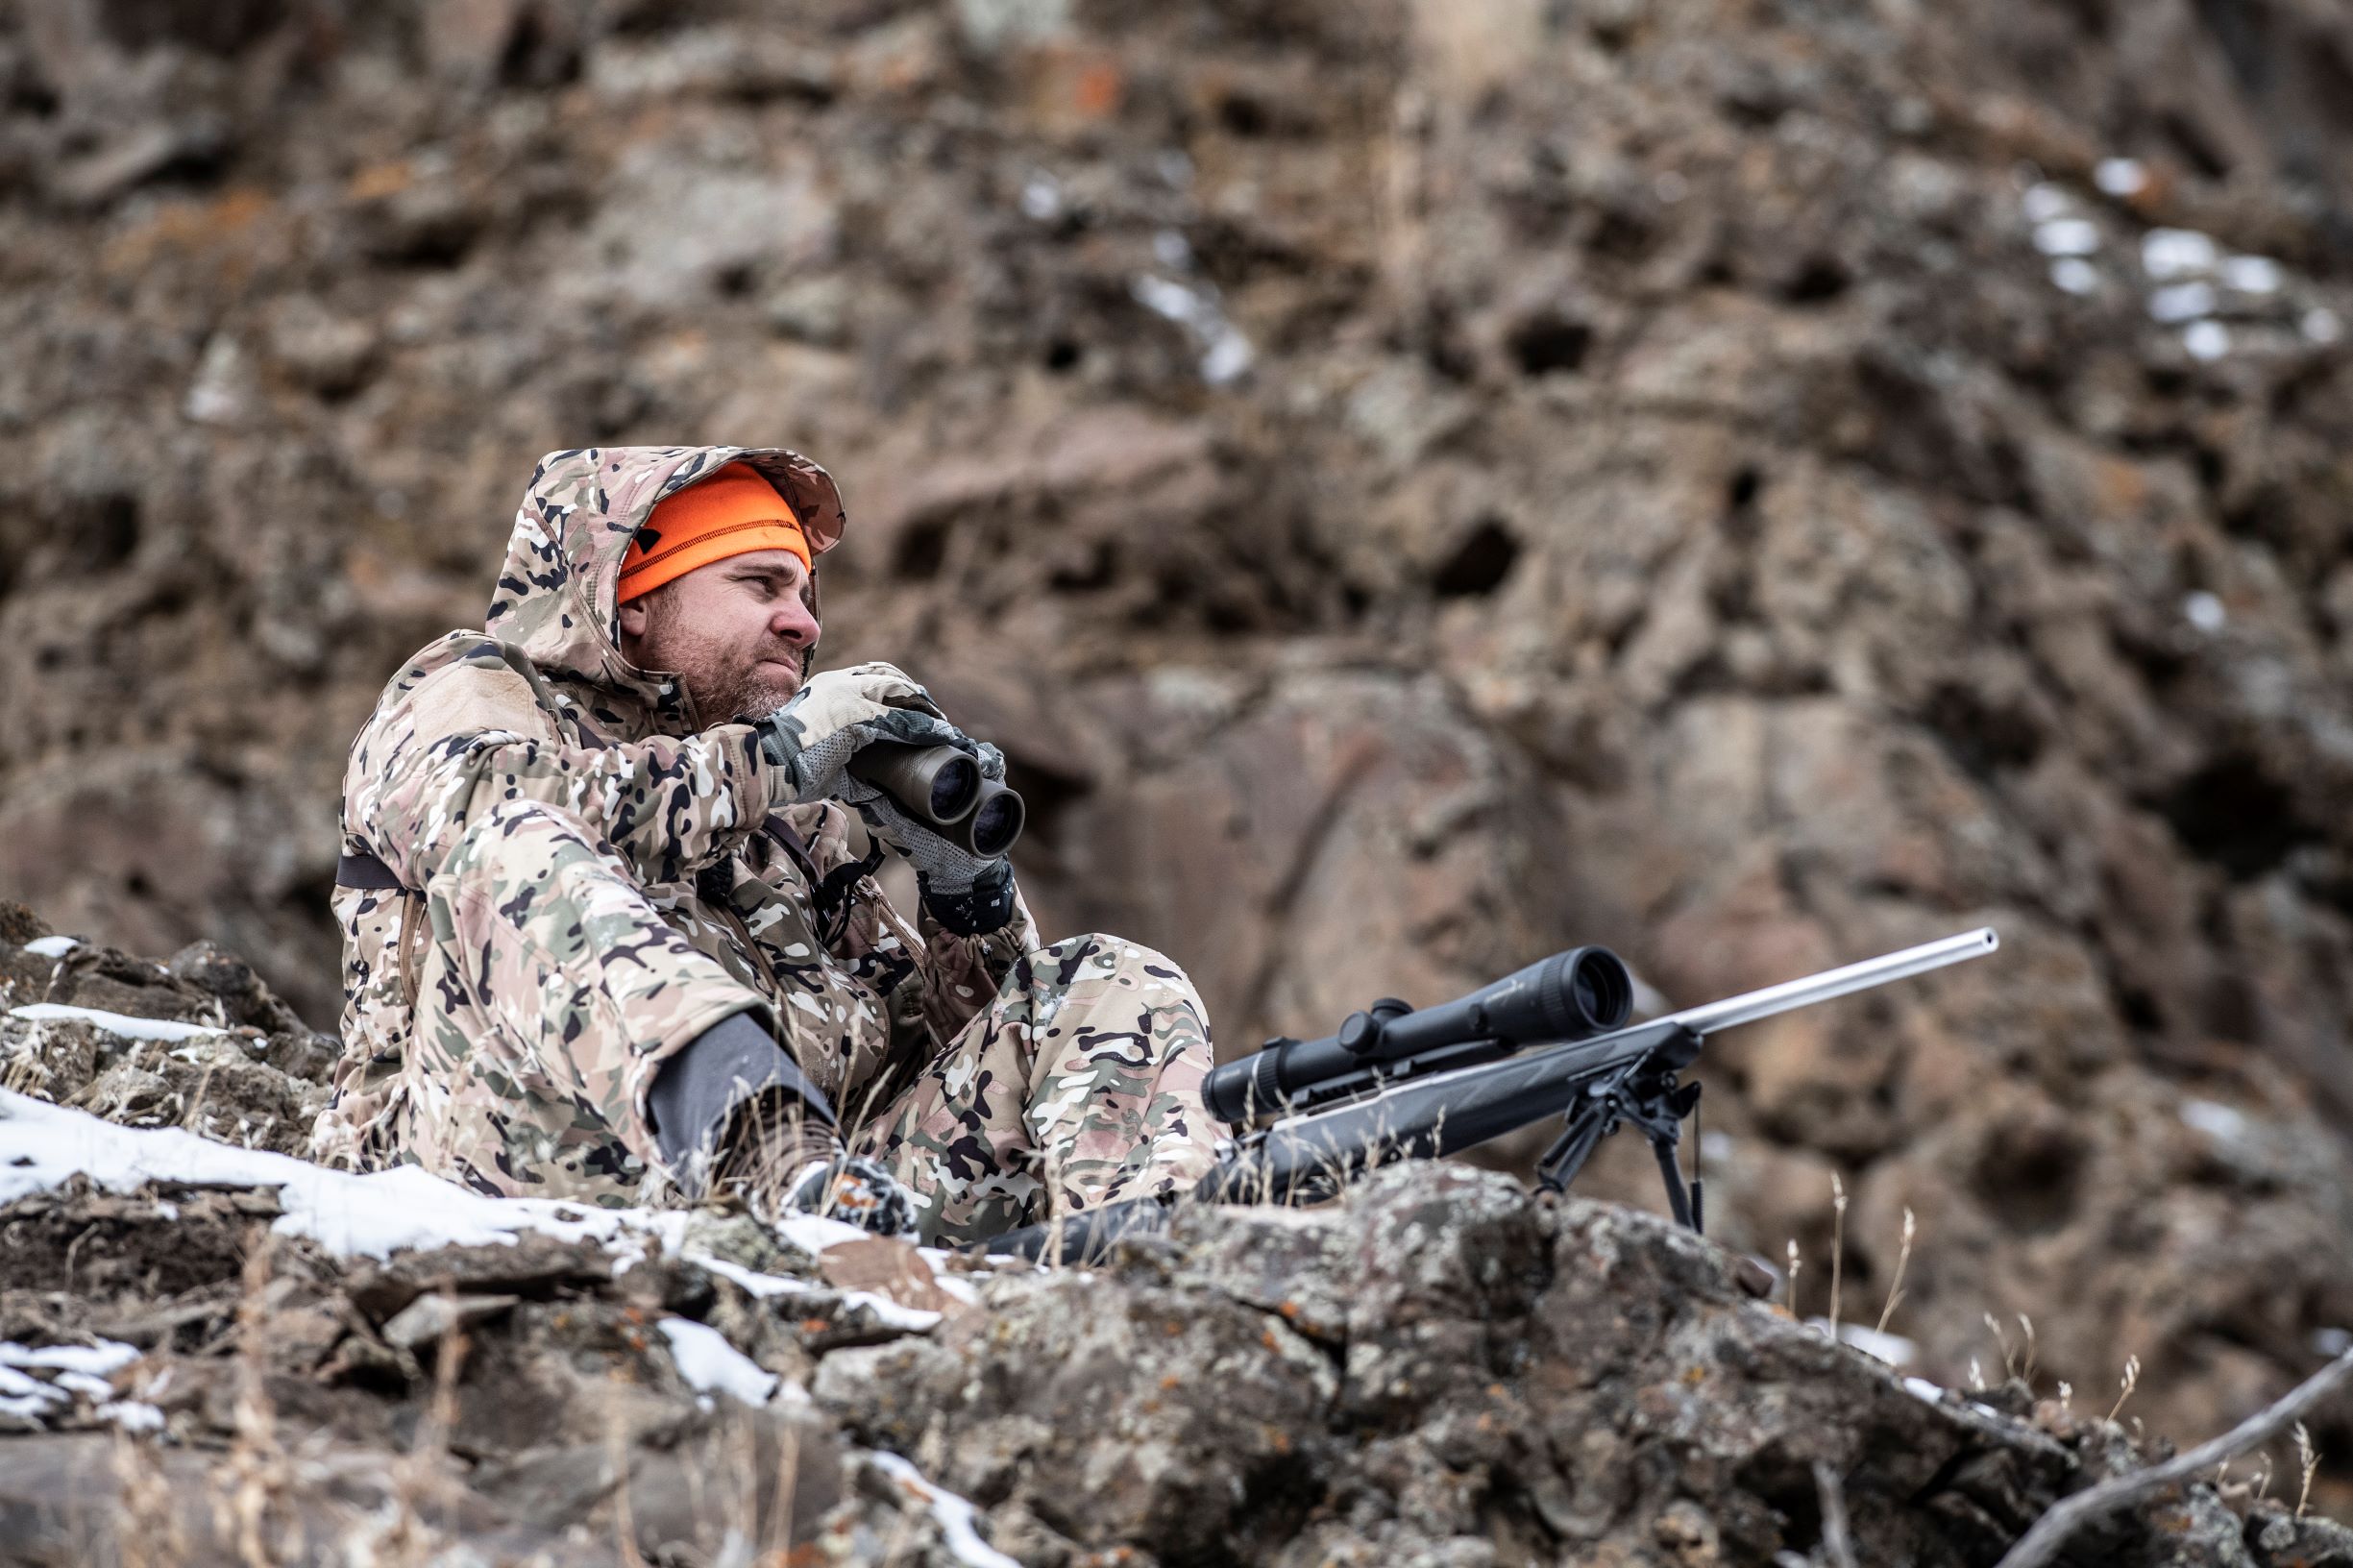 hunter wearing camouflage and blaze orange